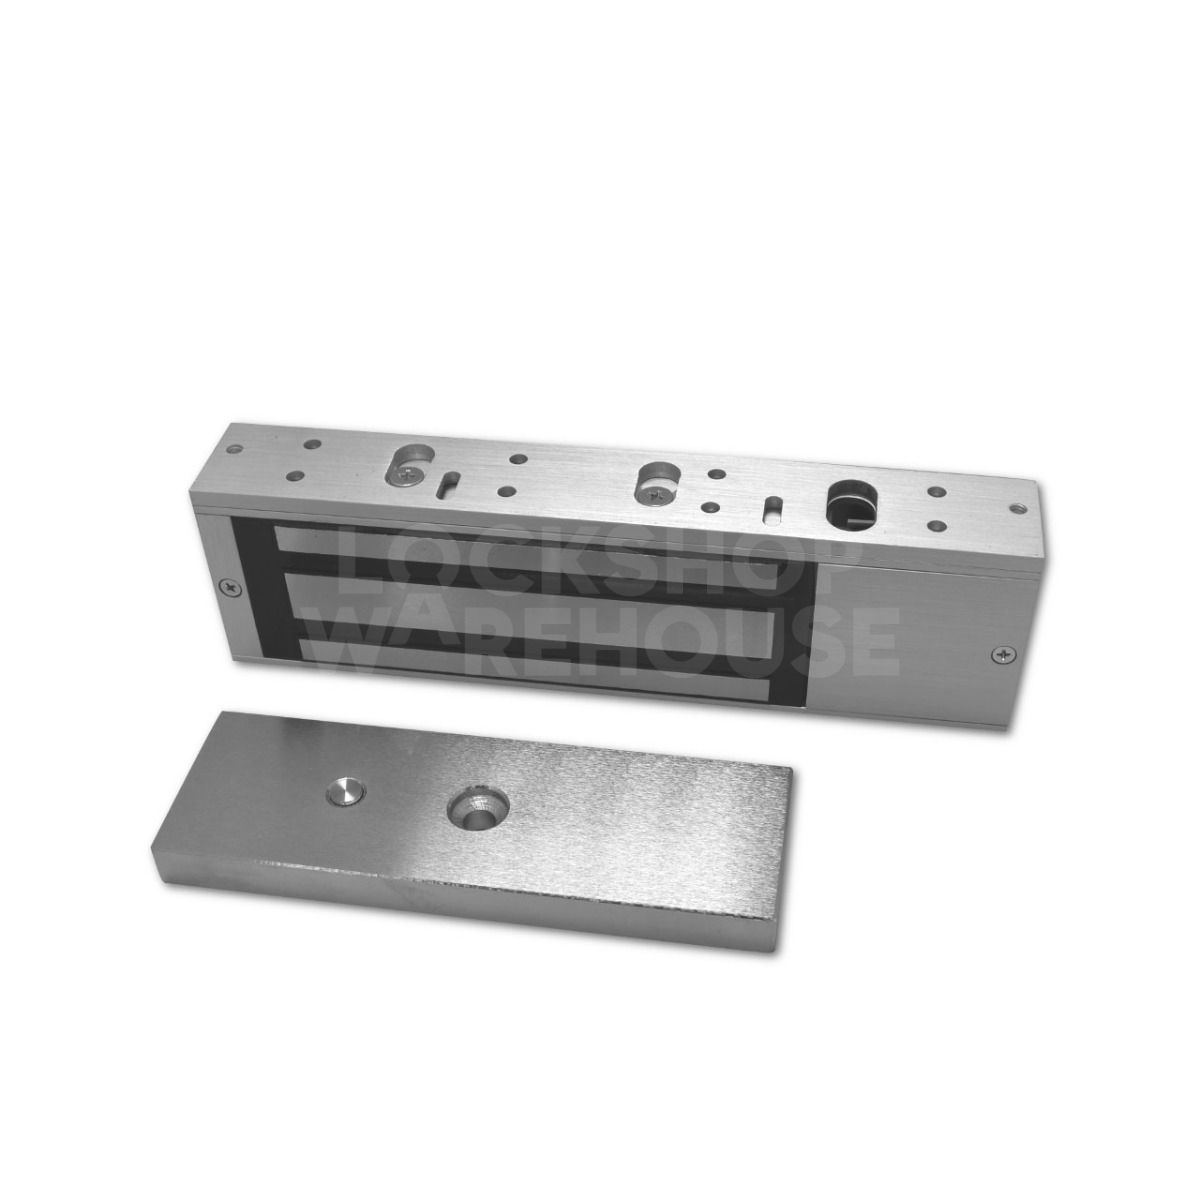 Standard Electro Magnetic Monitored Lock Single